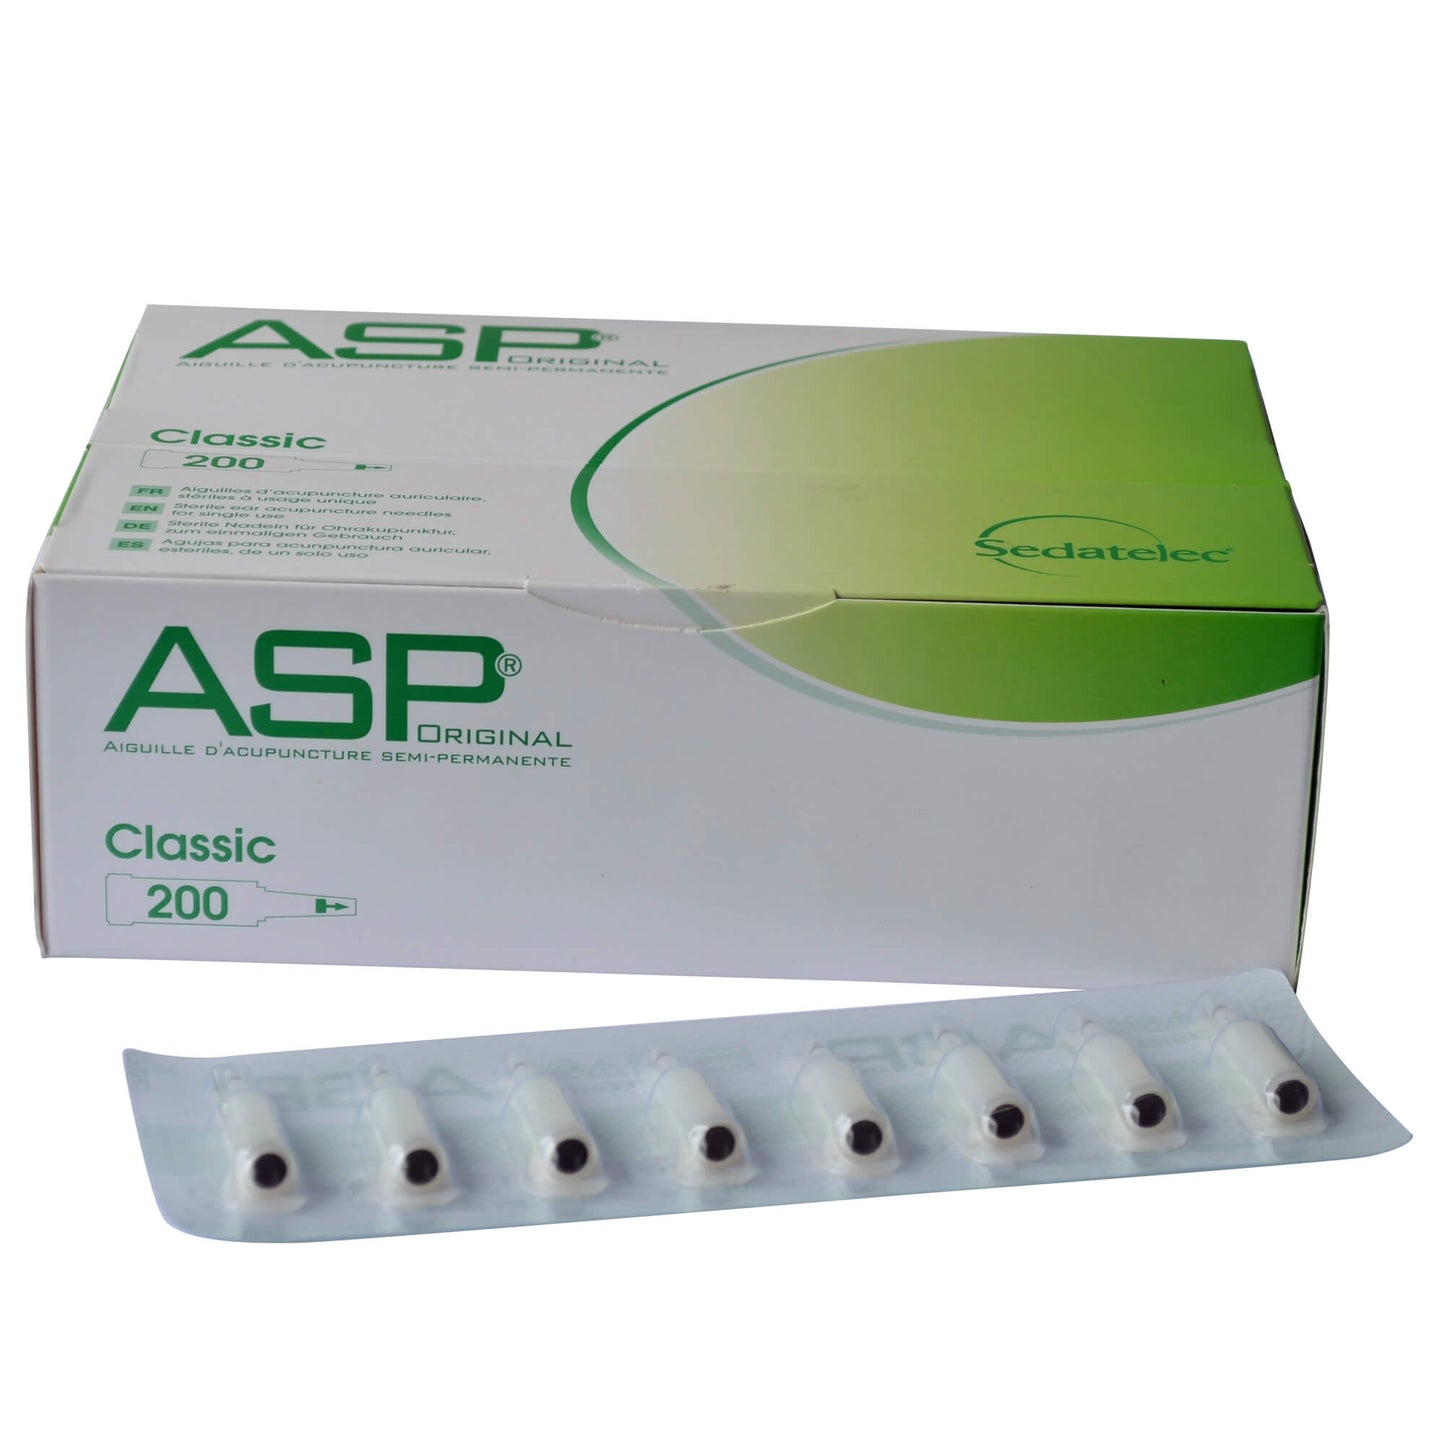 ASP Classic 200 needles